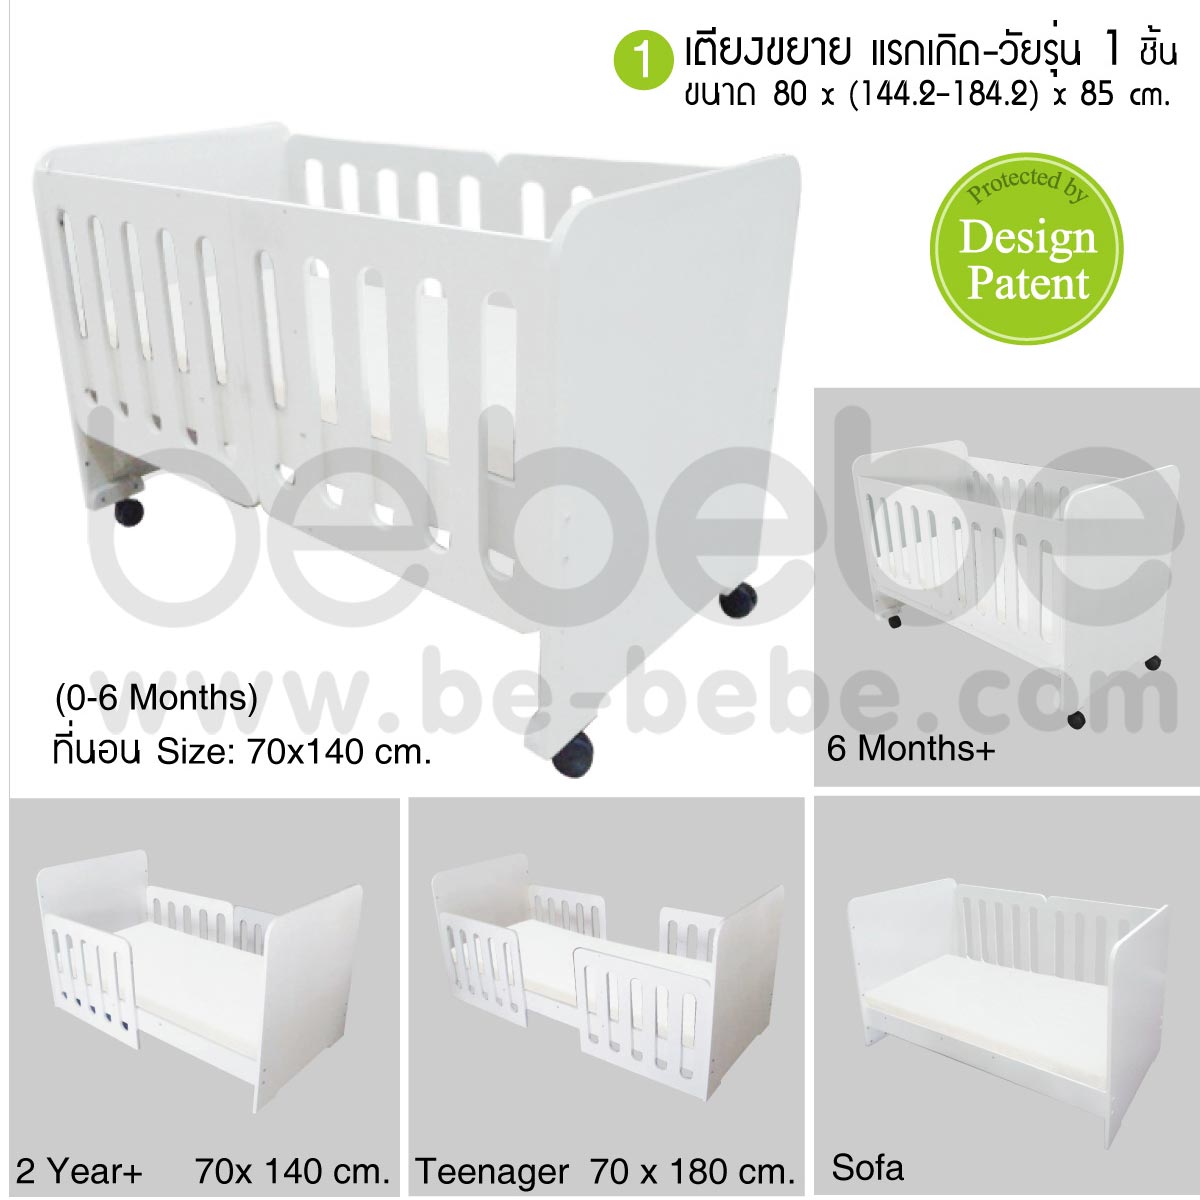 be bebe :ชุดเตียงเด็กแรกเกิด-วัยรุ่นขยายความยาวและปรับเป็นโซฟาได้+ที่นอนฟองน้ำ+ชุดเครื่องนอน (70x140/180) /ขาว